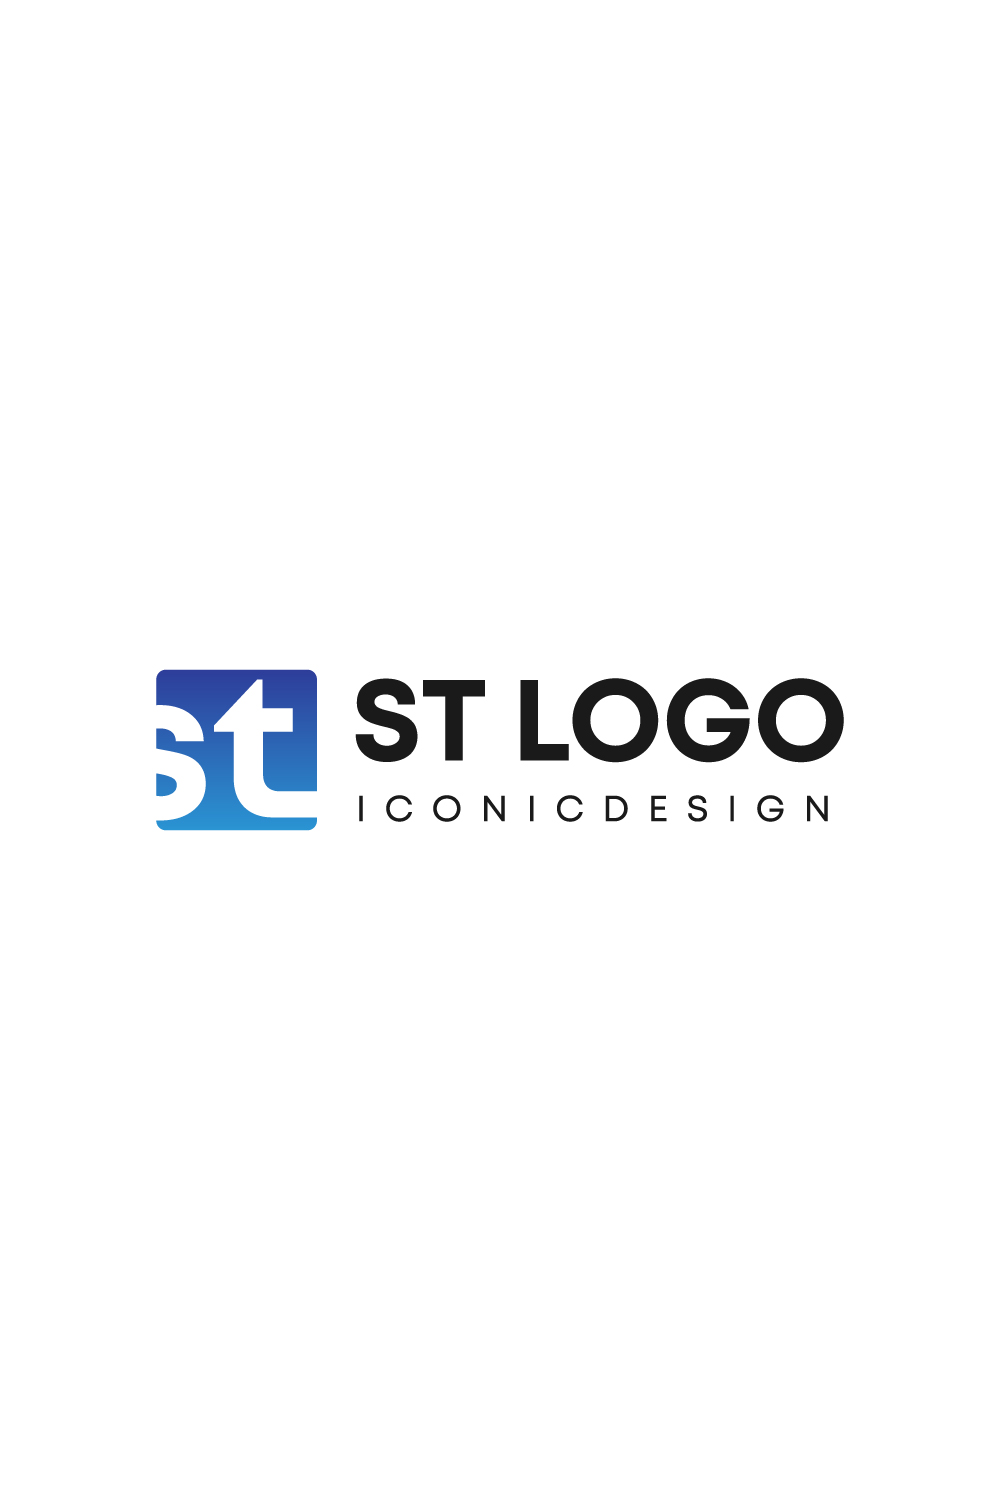 ST logo pinterest preview image.